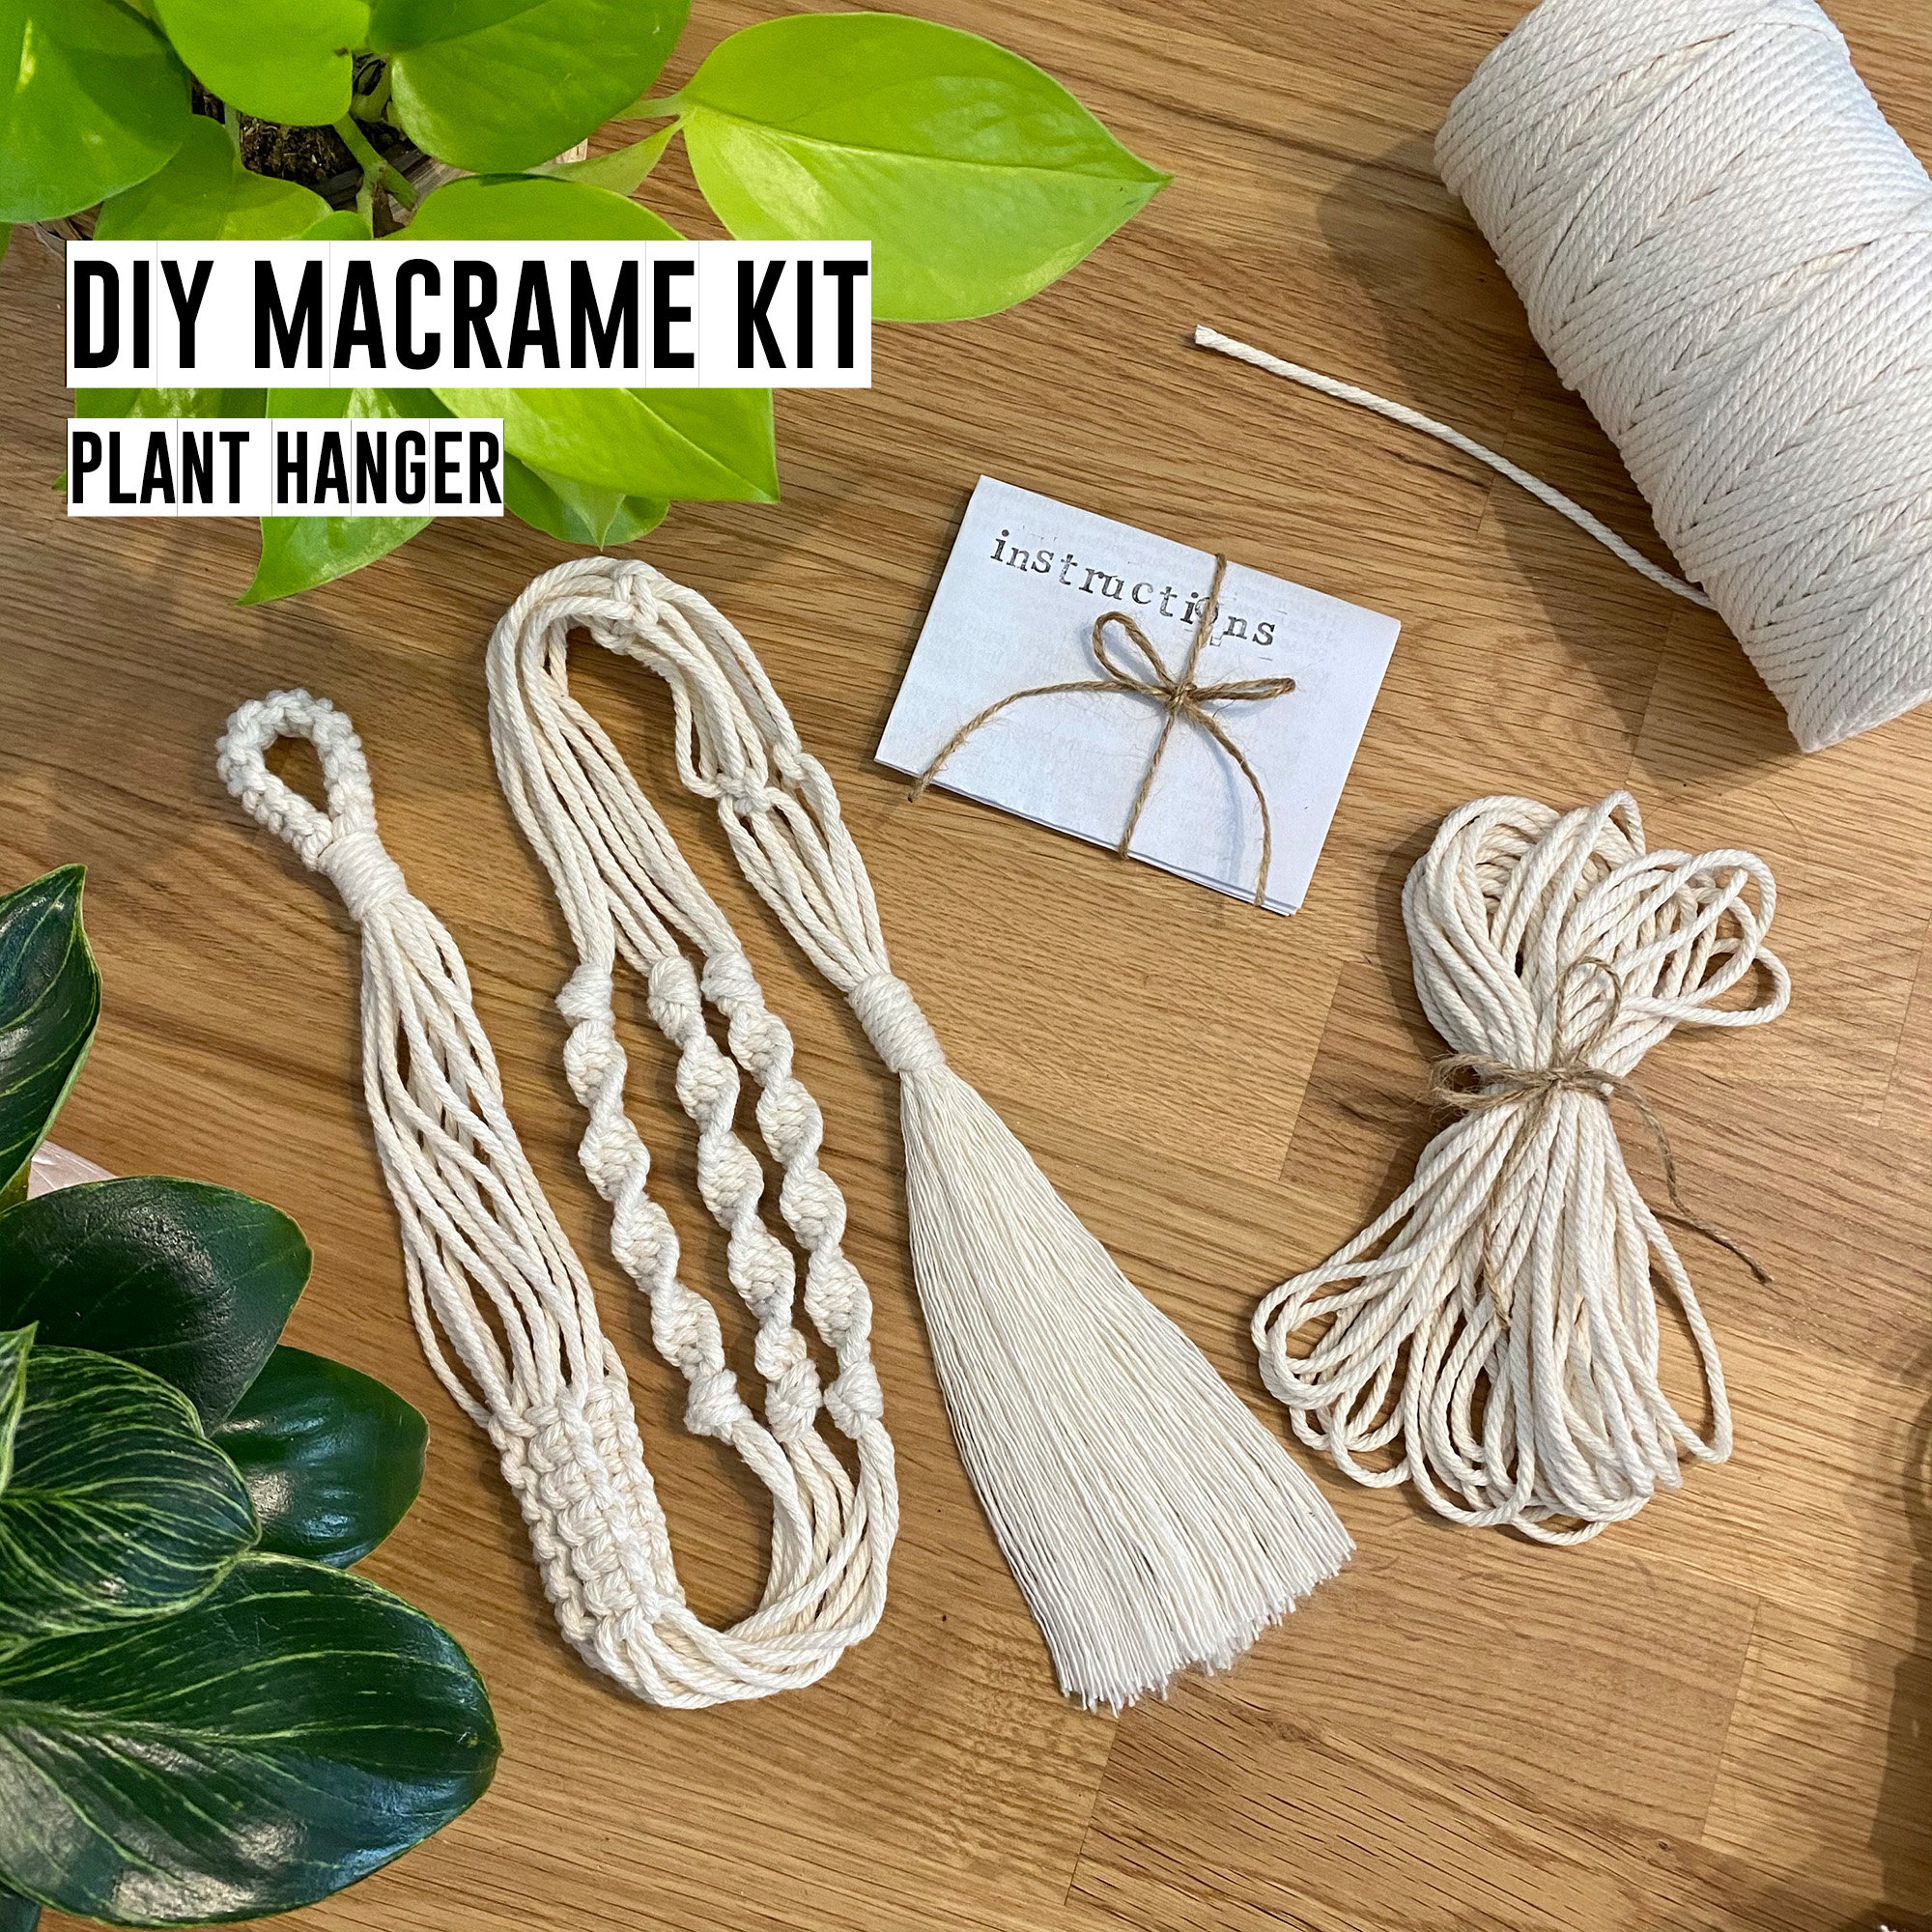 DIY Macrame Kit Beginner, Macrame Hoop Pattern, DIY Craft Kit for Adults,  Best Friend Birthday Gift for Her, Macrame Wall Hanging 